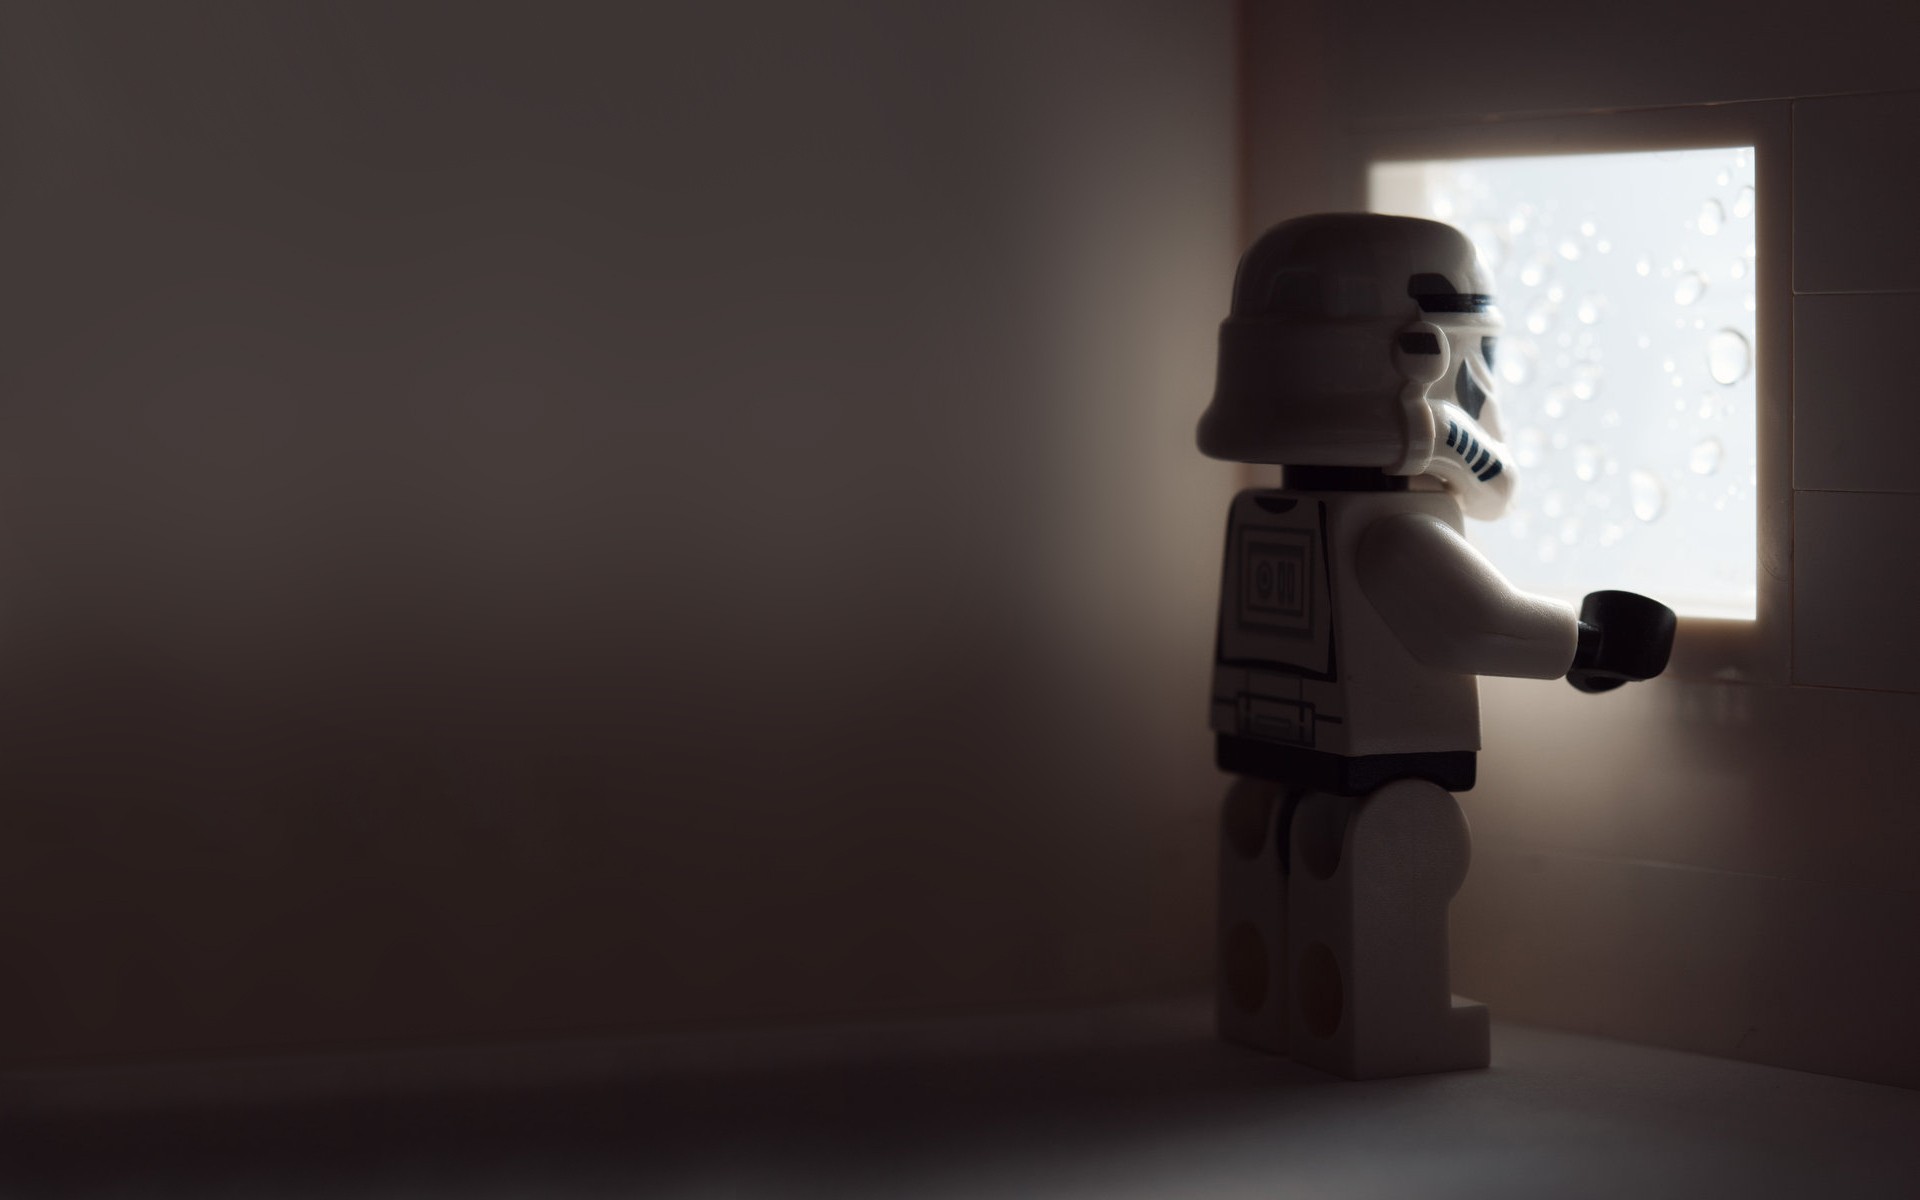 Star Wars Lego Stormtroopers Wallpaper Background